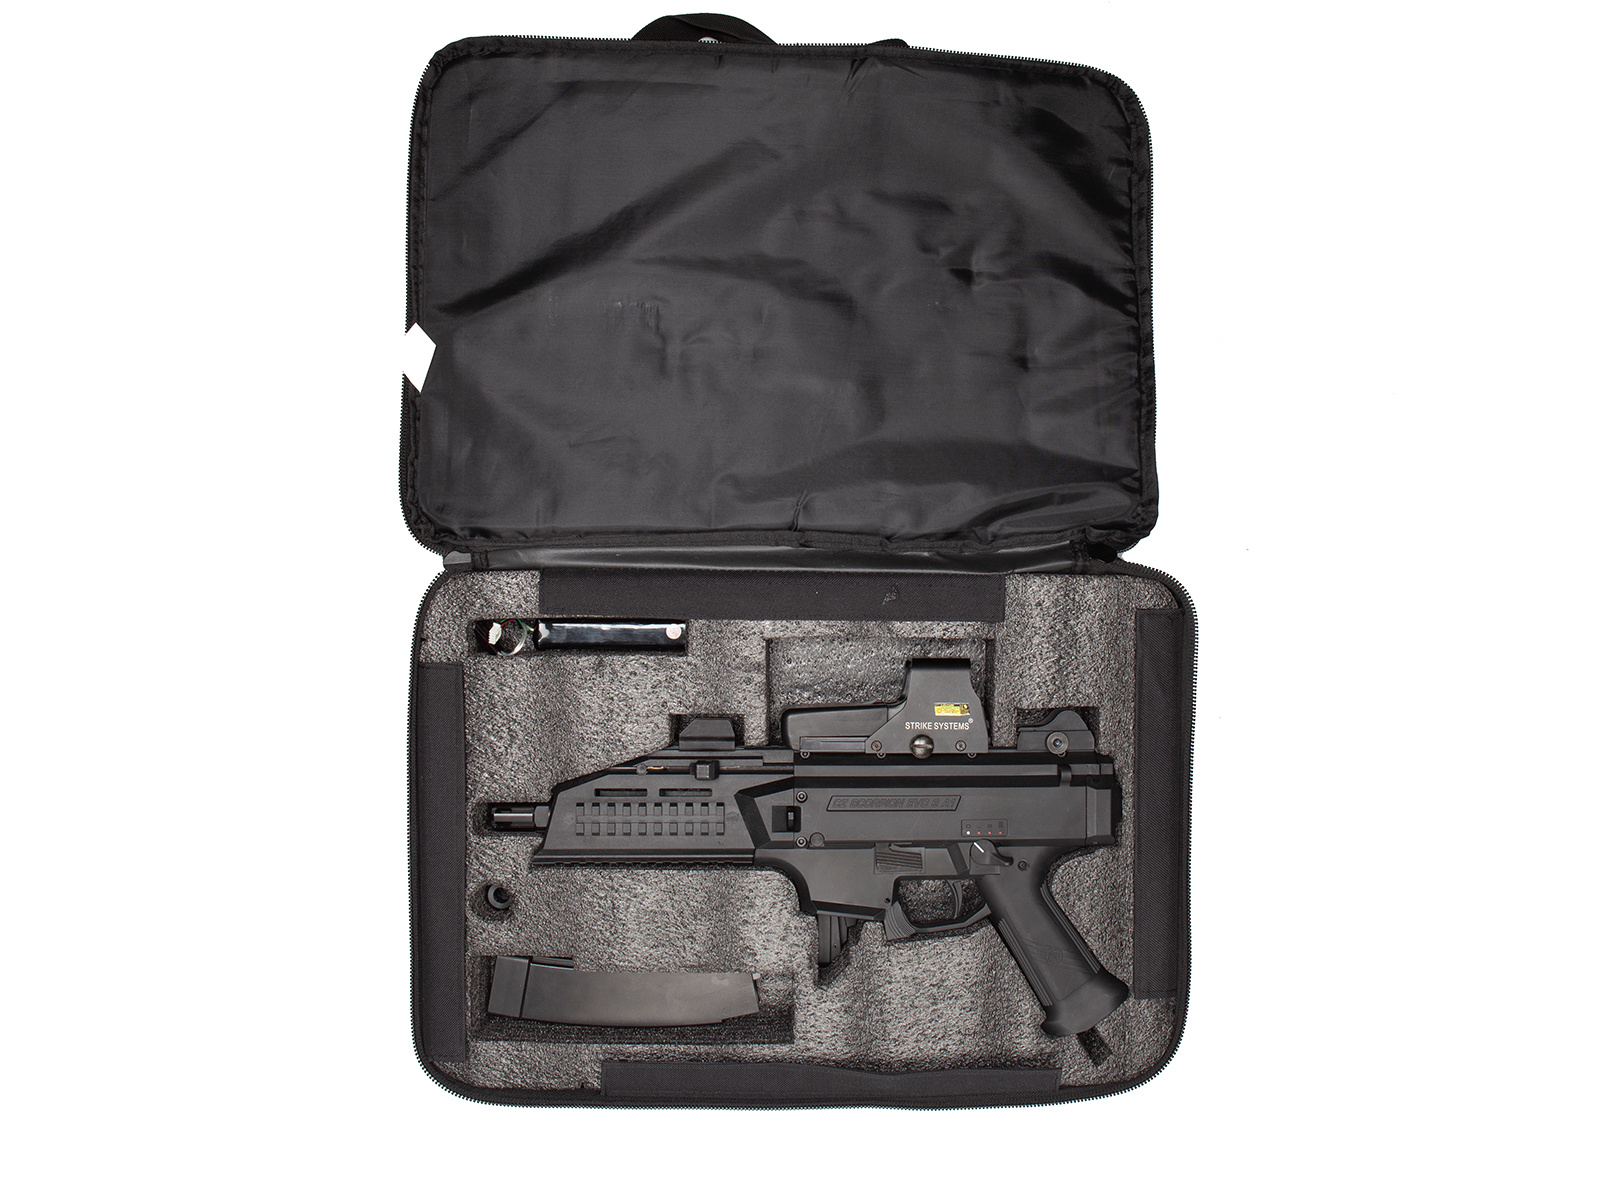 ASG Sac de carabine Scorpion Bag EVO 3 A1 - BK